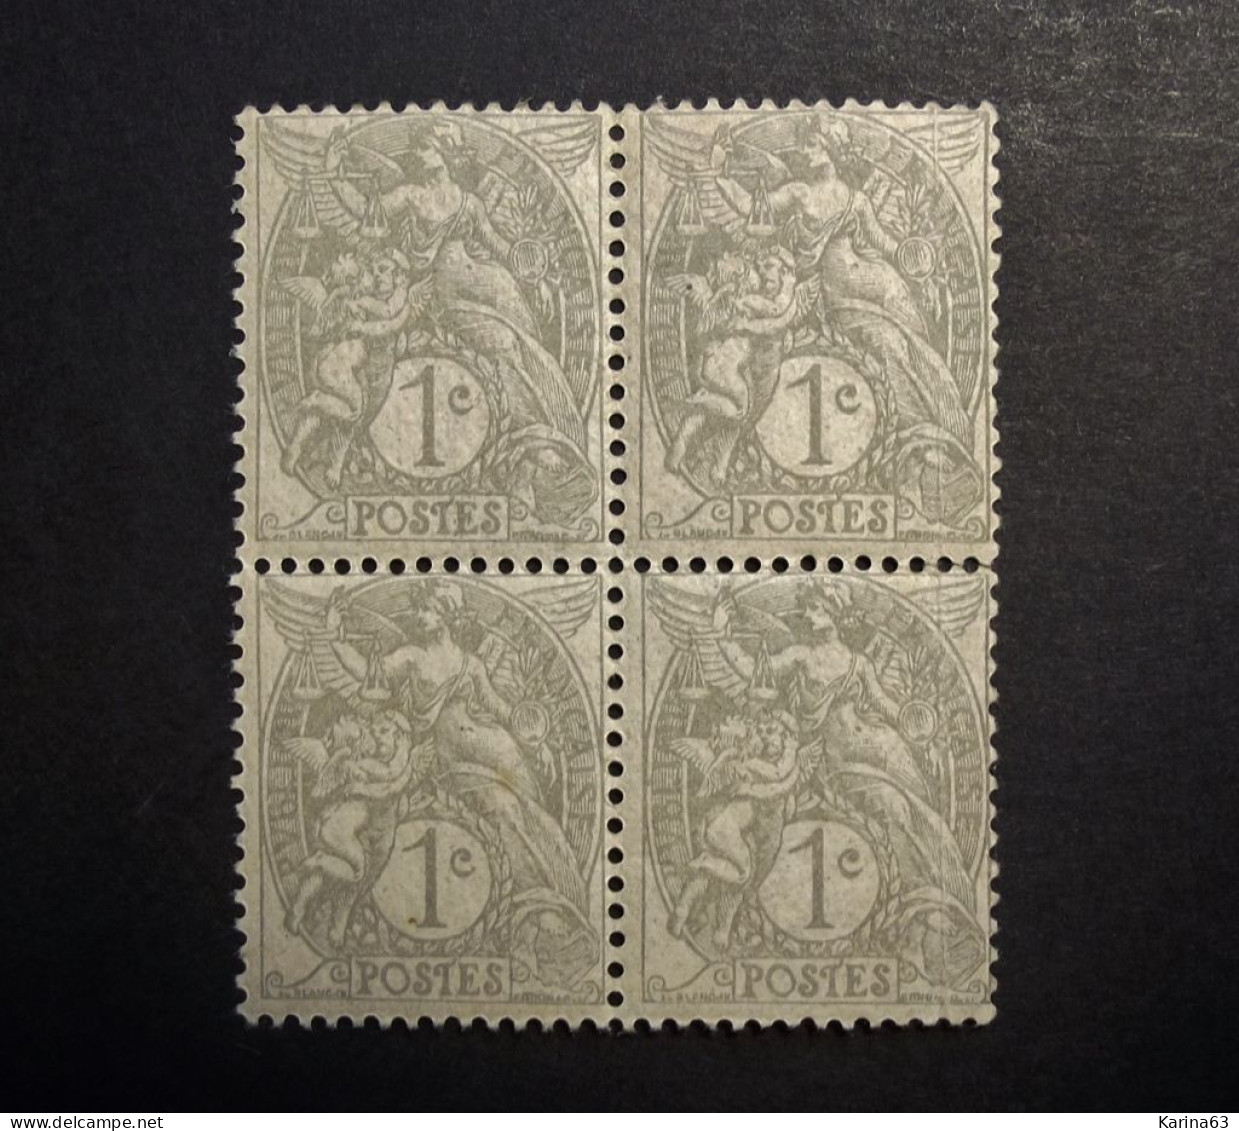 France - Frankrijk - Blanc - 1900 - 29 - 4 Bloc De 4 Timbres - N° 107 - 107a - N°108 - N° 109  - Neuf - MNH - 1900-29 Blanc